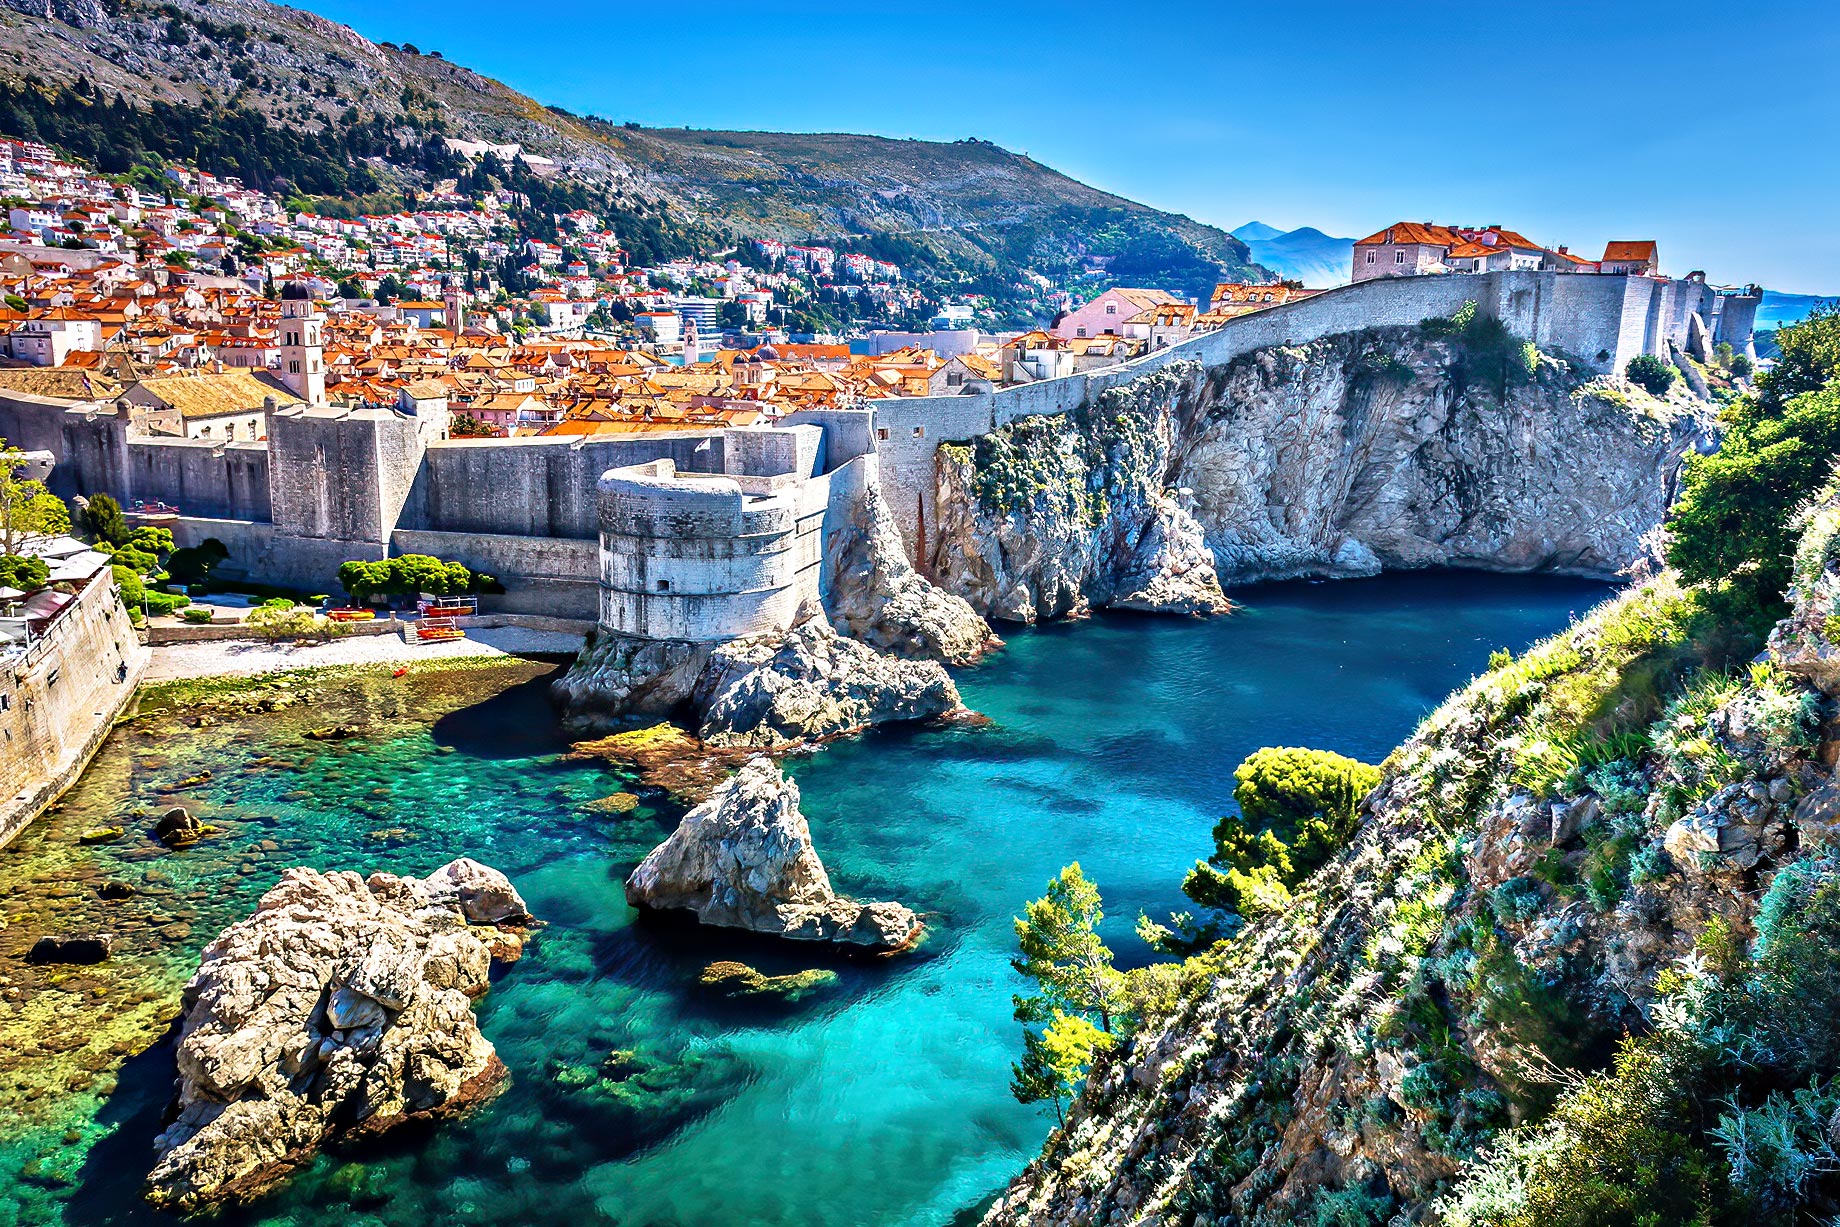 Dubrovnik, Croatia: The Pearl of the Adriatic